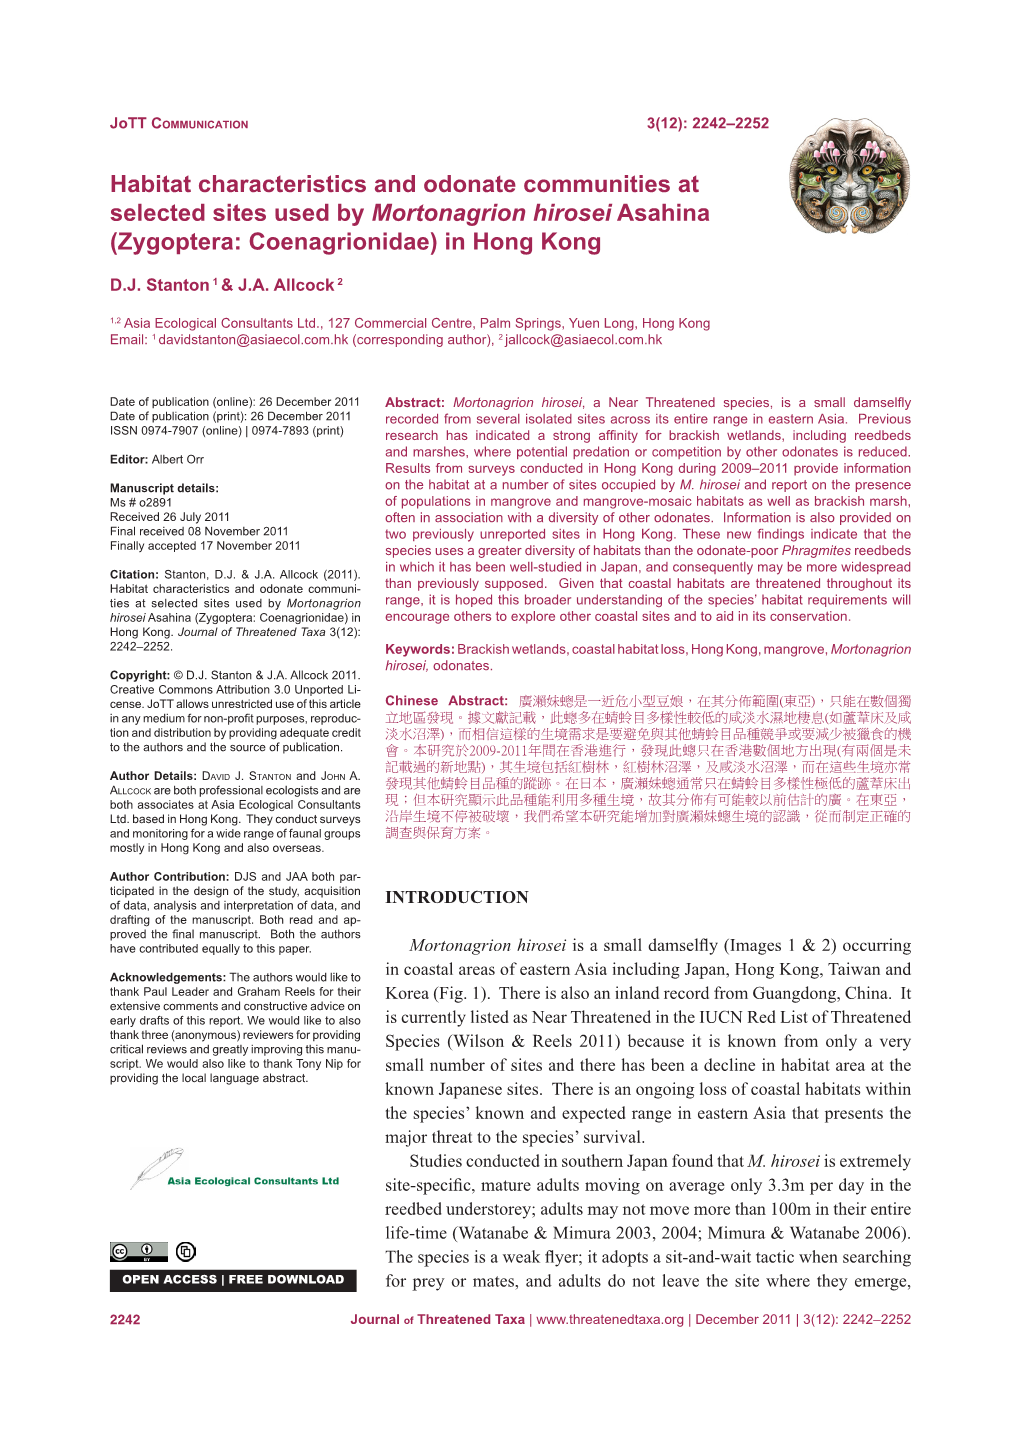 Habitat Characteristics and Odonate Communities at Selected Sites Used by Mortonagrion Hirosei Asahina (Zygoptera: Coenagrionidae) in Hong Kong